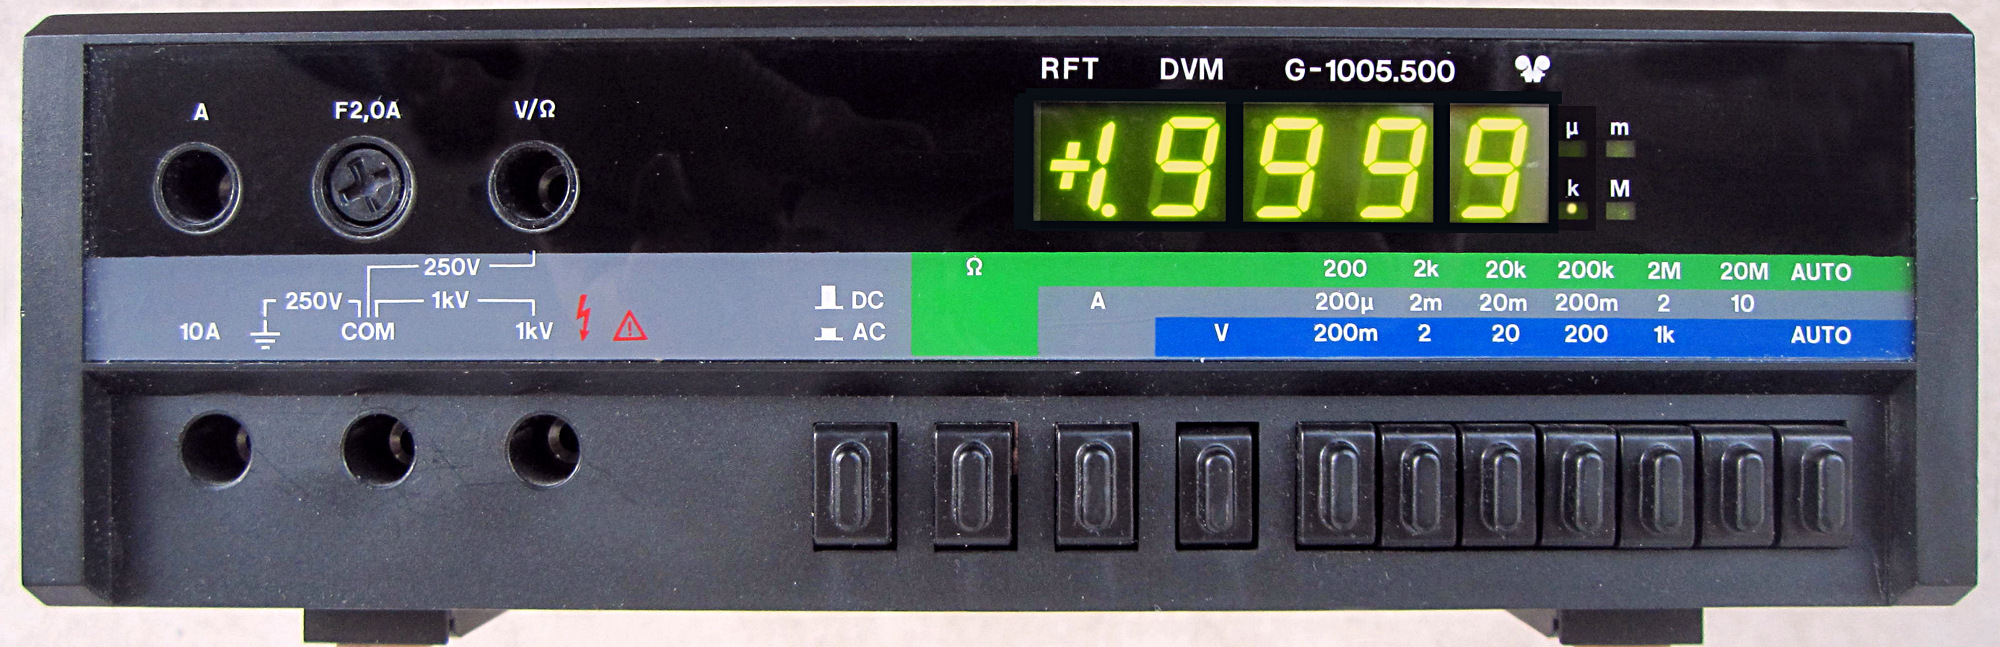 Funkwerk Erfurt / ERMIC Bildarchiv: Digitalvoltmeter bzw. Multimeter Typ G-1005.500